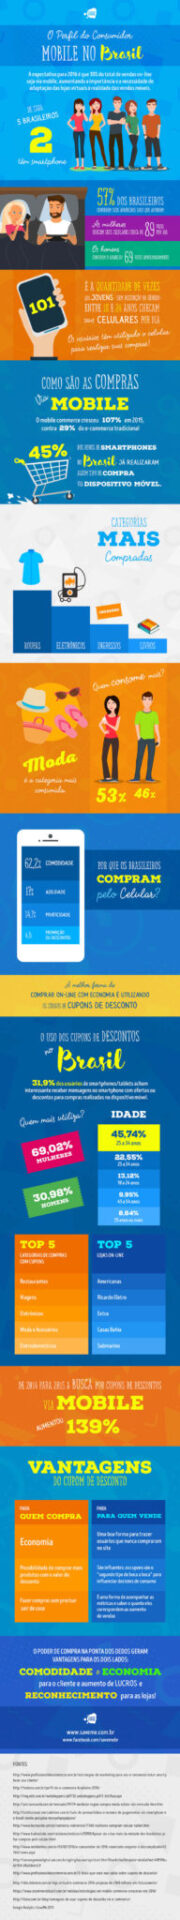 perfil-consumidor-mobile